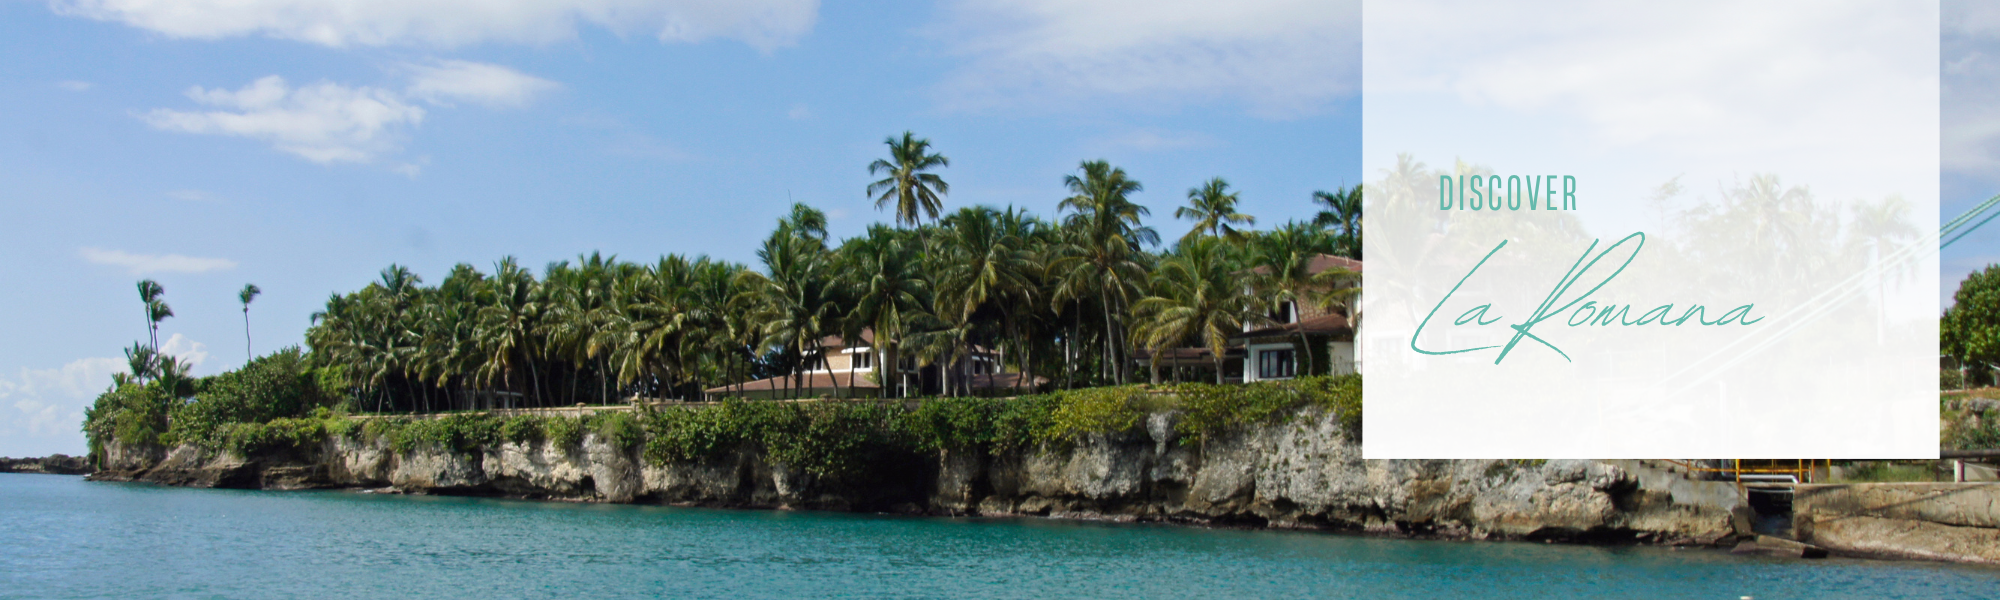 oceanside resort in La Romana, Dominican Republic